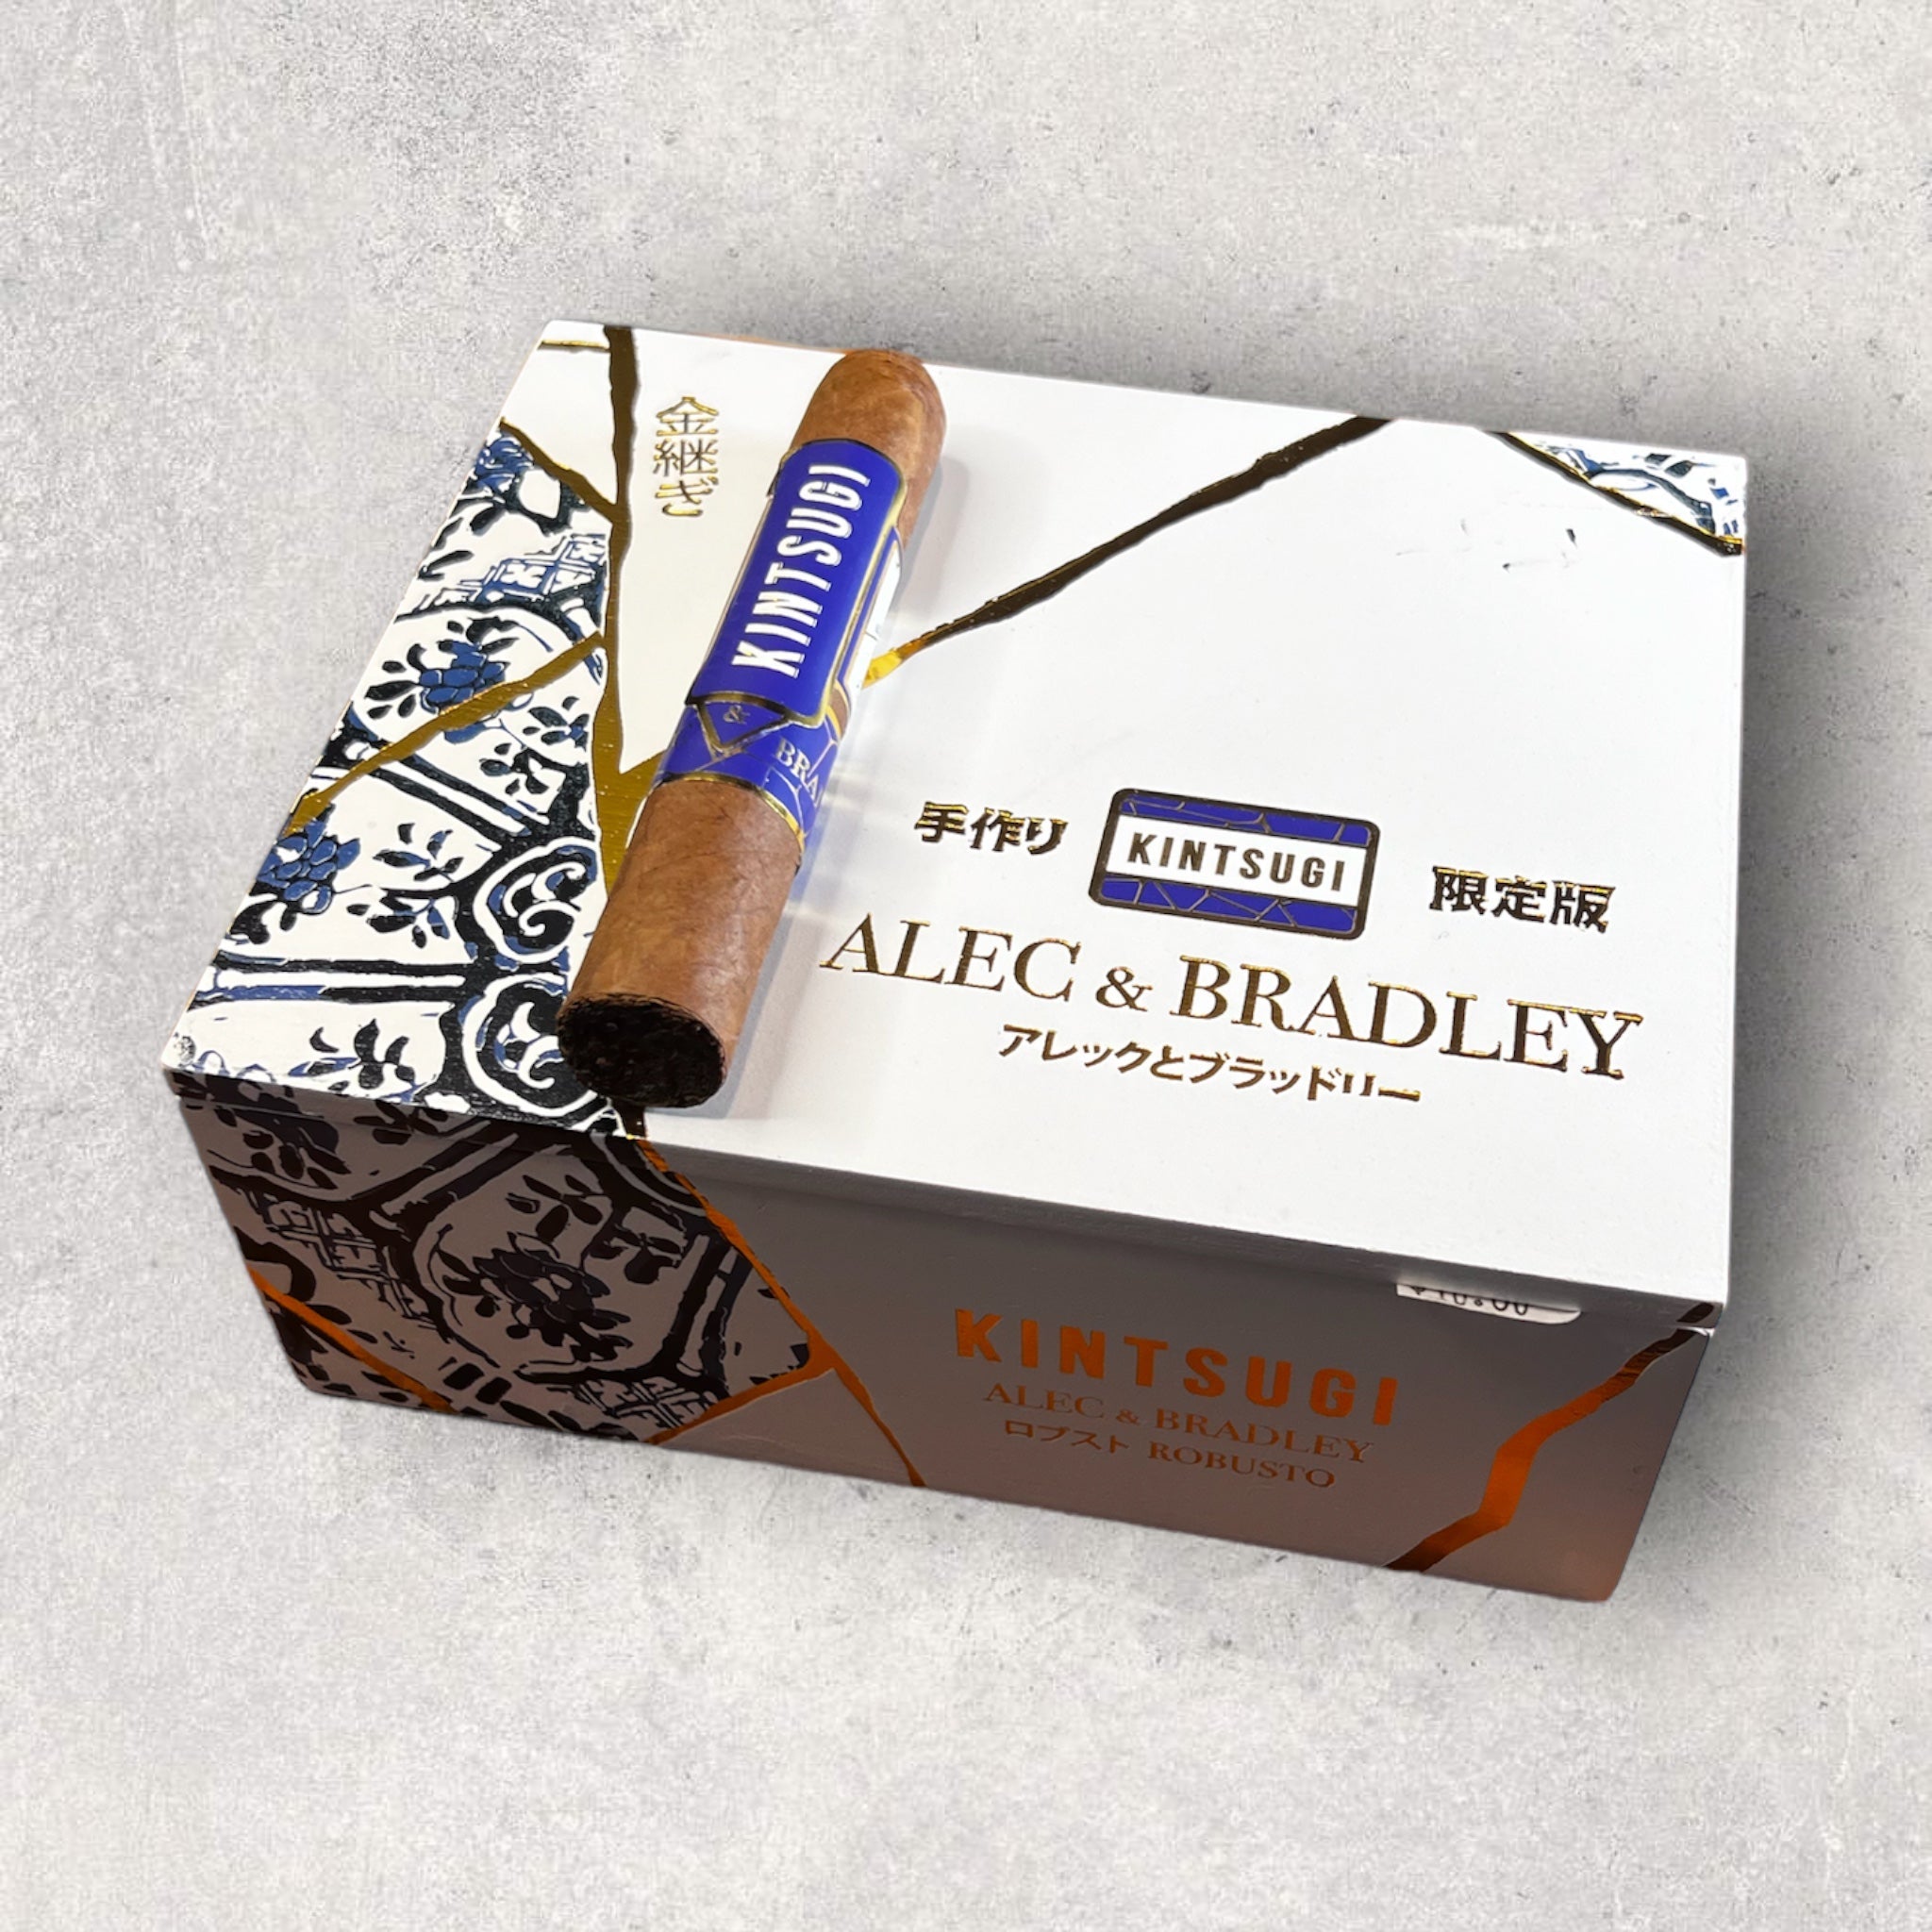 Alec & Bradley Kintsugi Robusto - Cigar 30